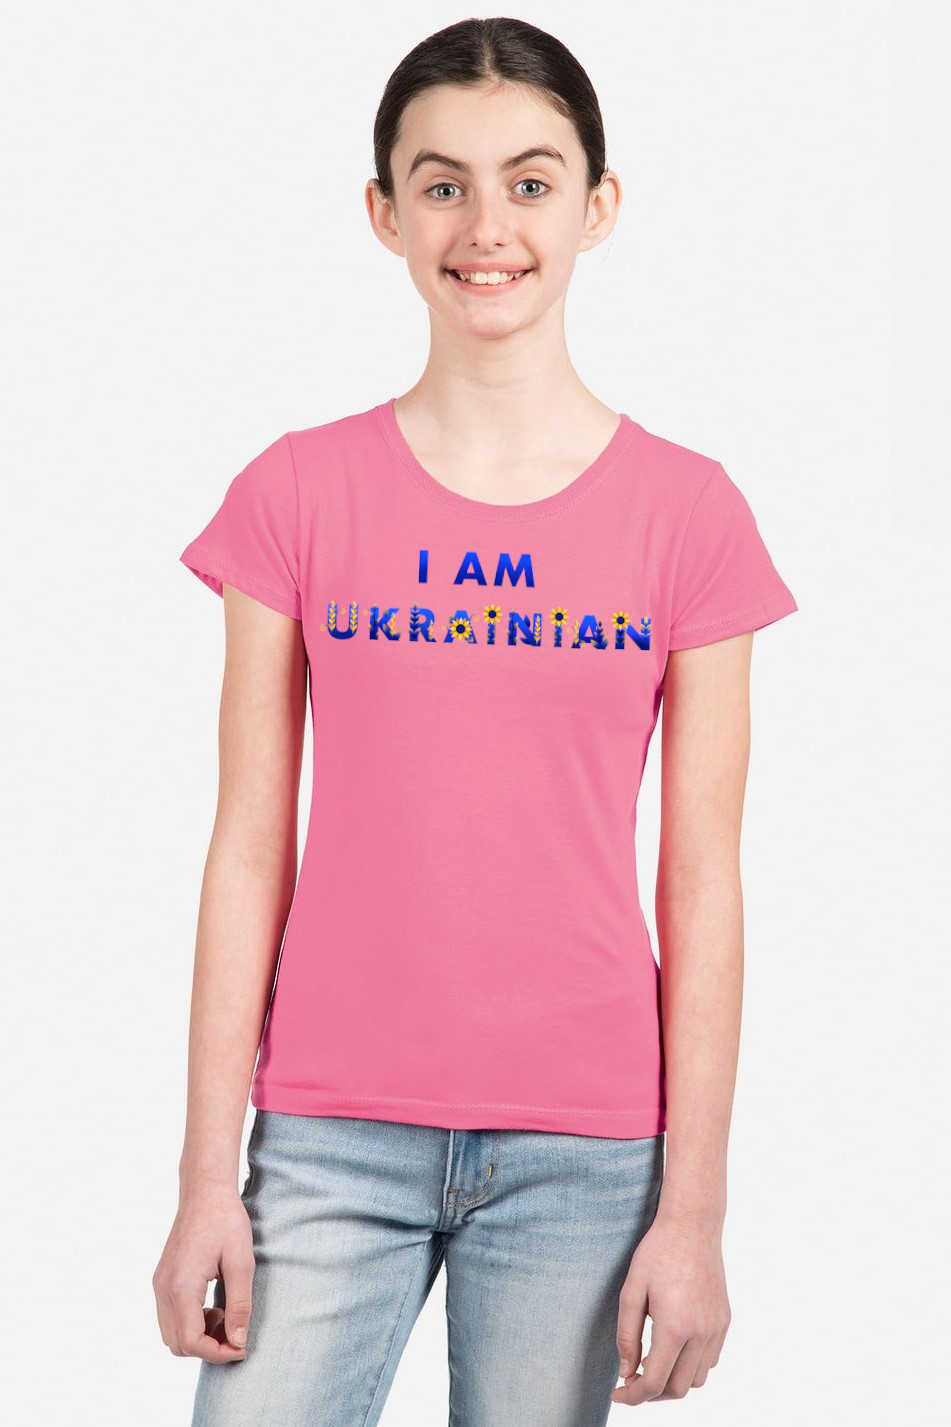 Girl's t-shirt "I AM UKRAINIAN"